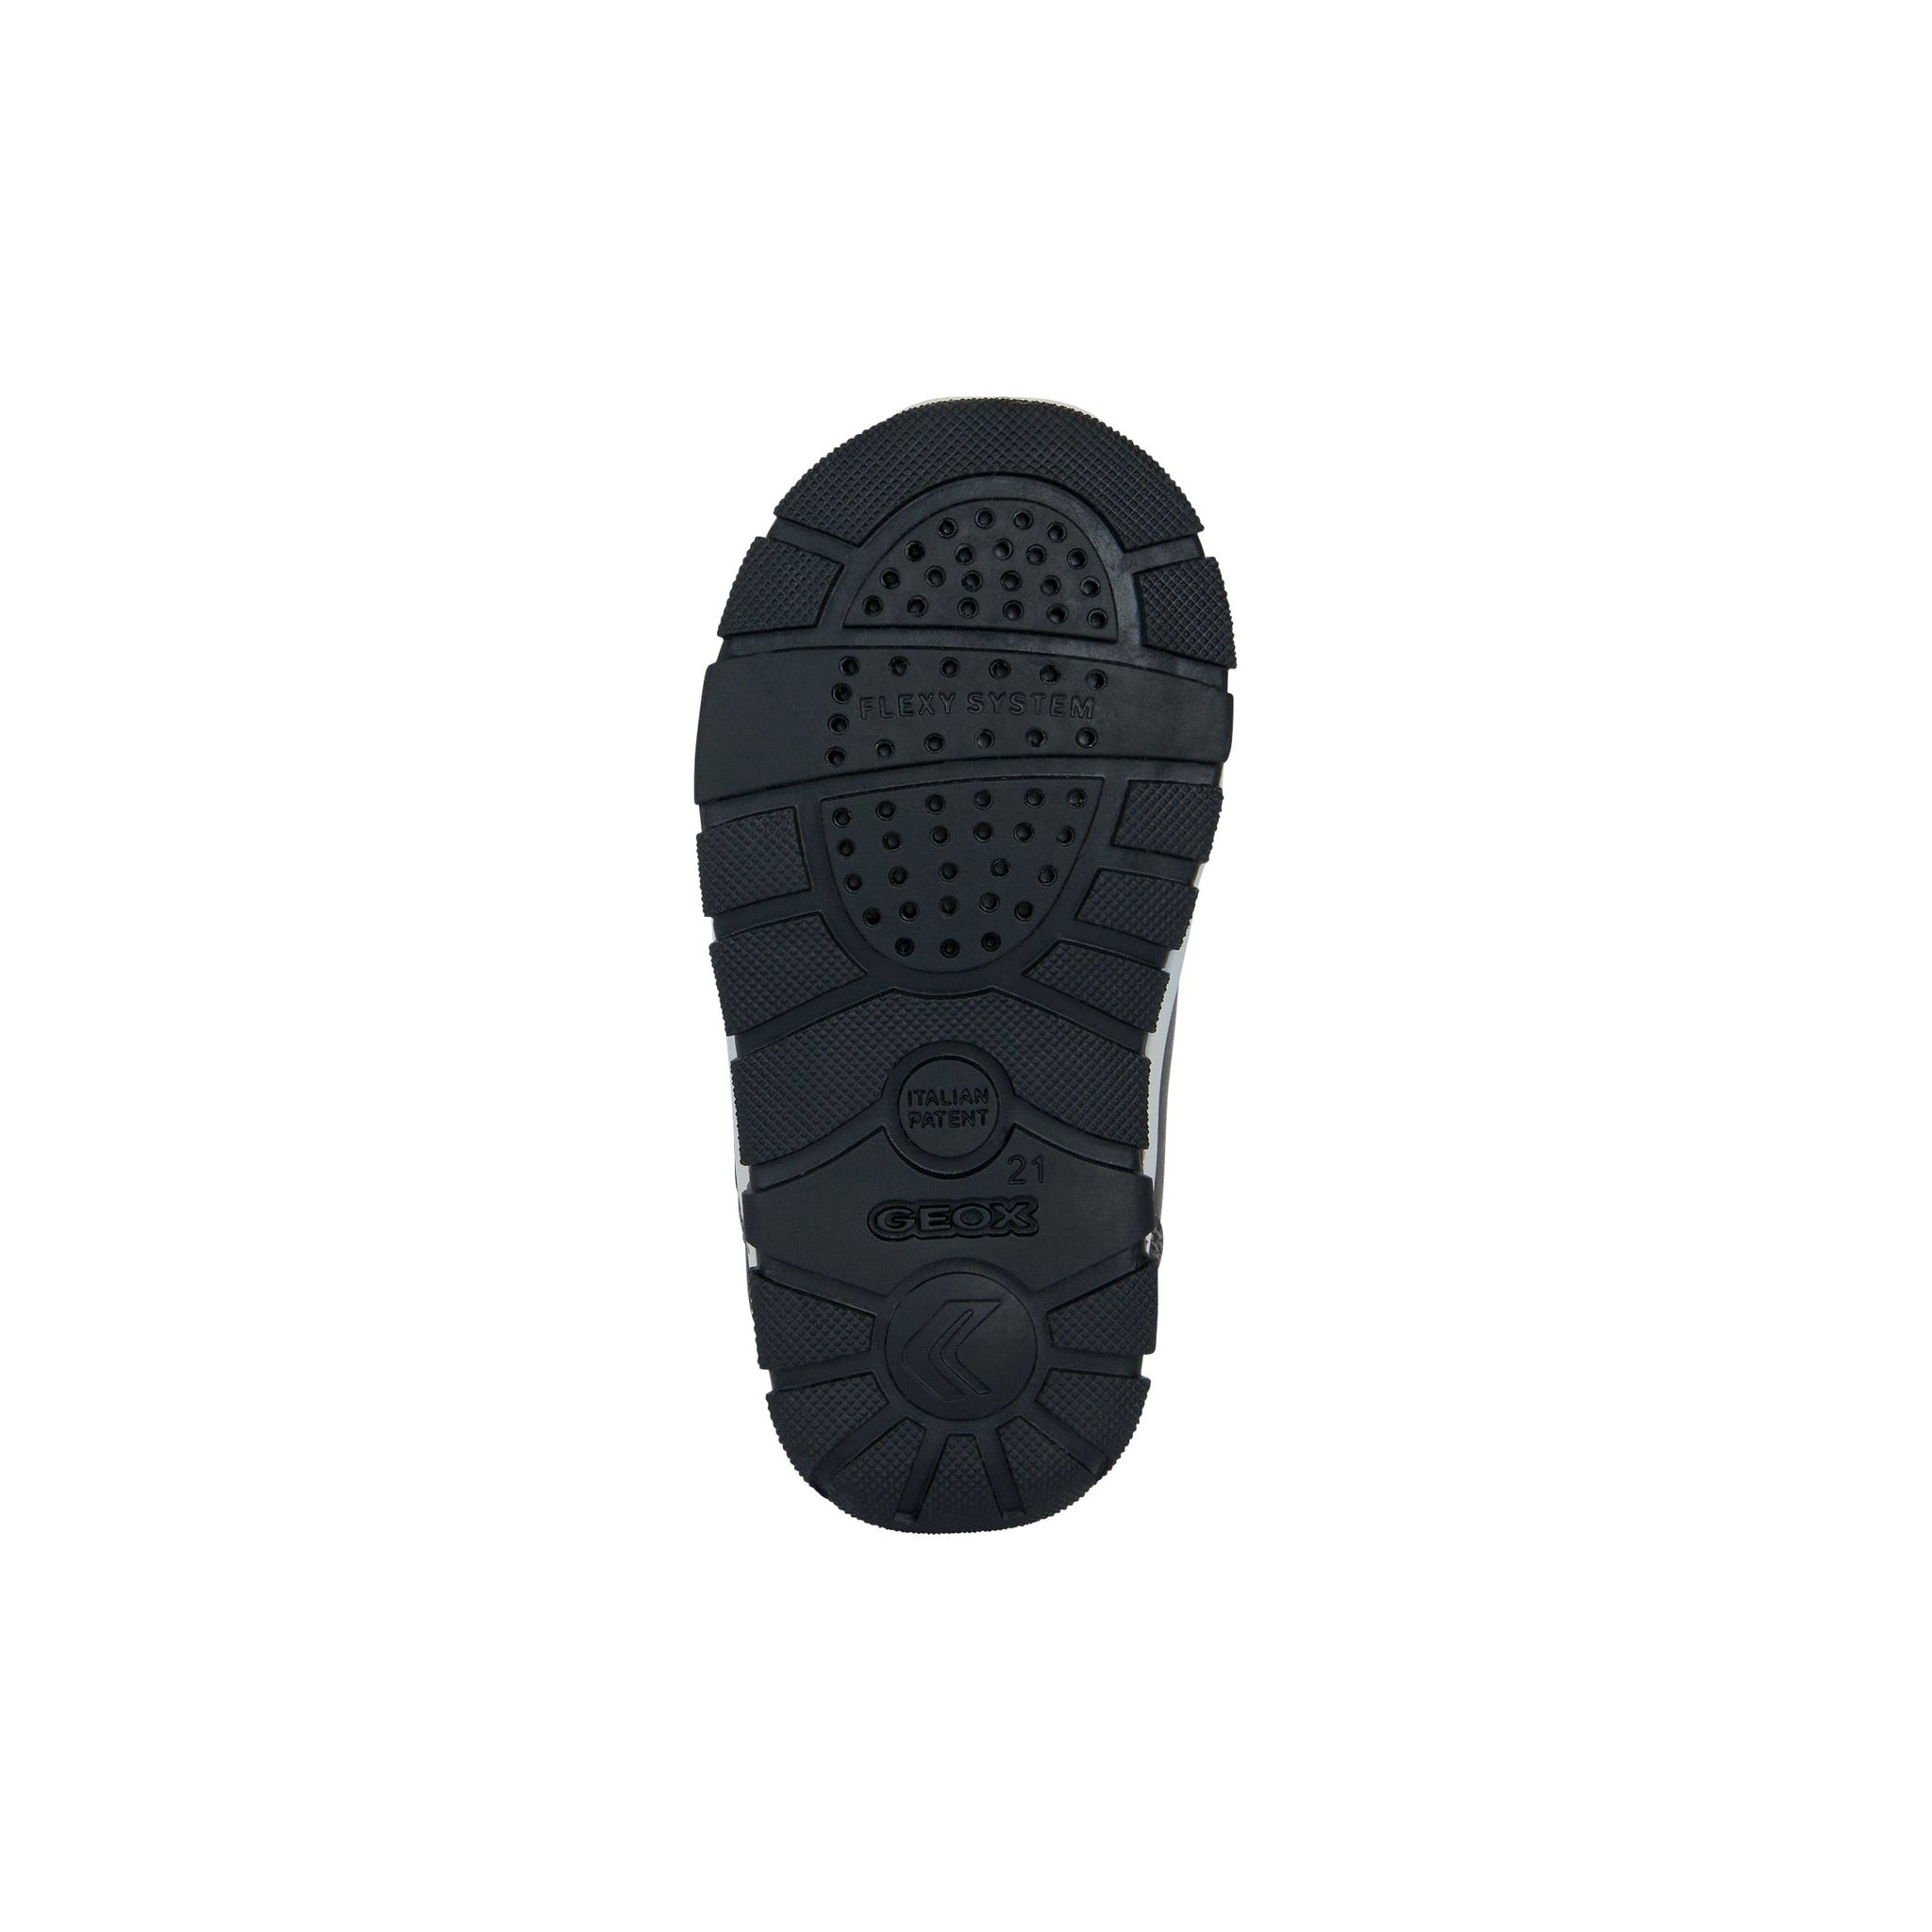 Geox Heira (B363XA)- Boys Velcro shoe in Black | Geox Shoes | Childrens Shoe Fitting | Wisemans | Bantry | West Cork | Ireland